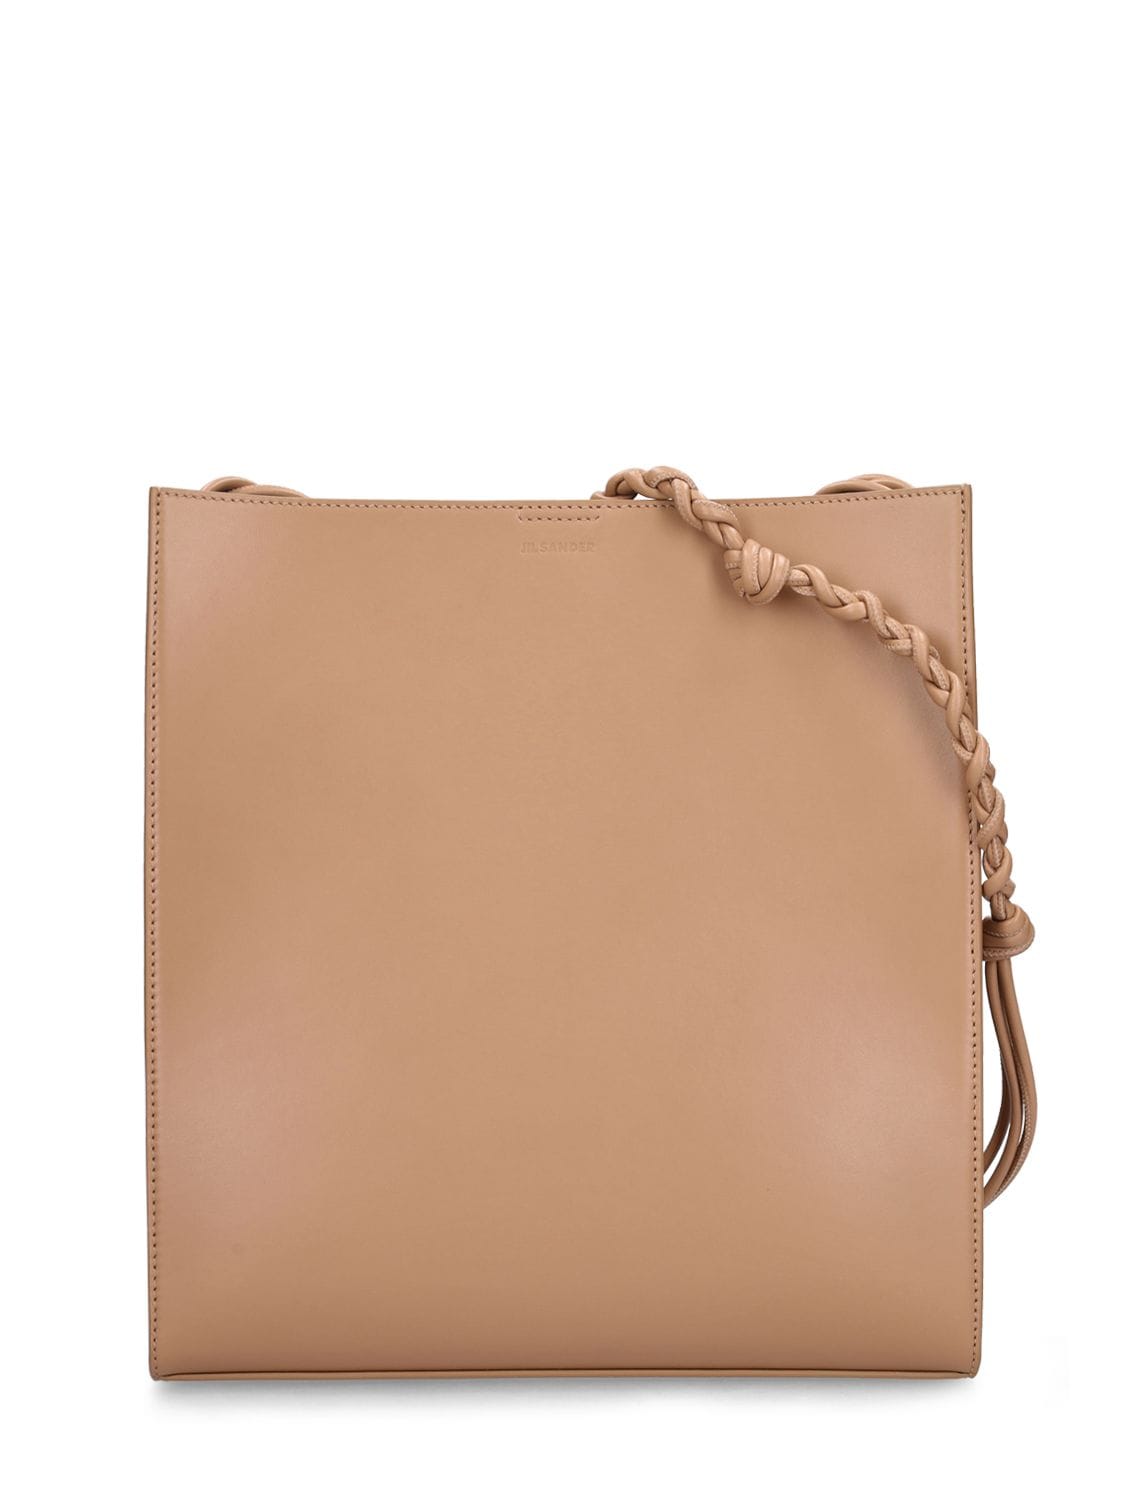 Image of Medium Tangle Leather Crossbody Bag